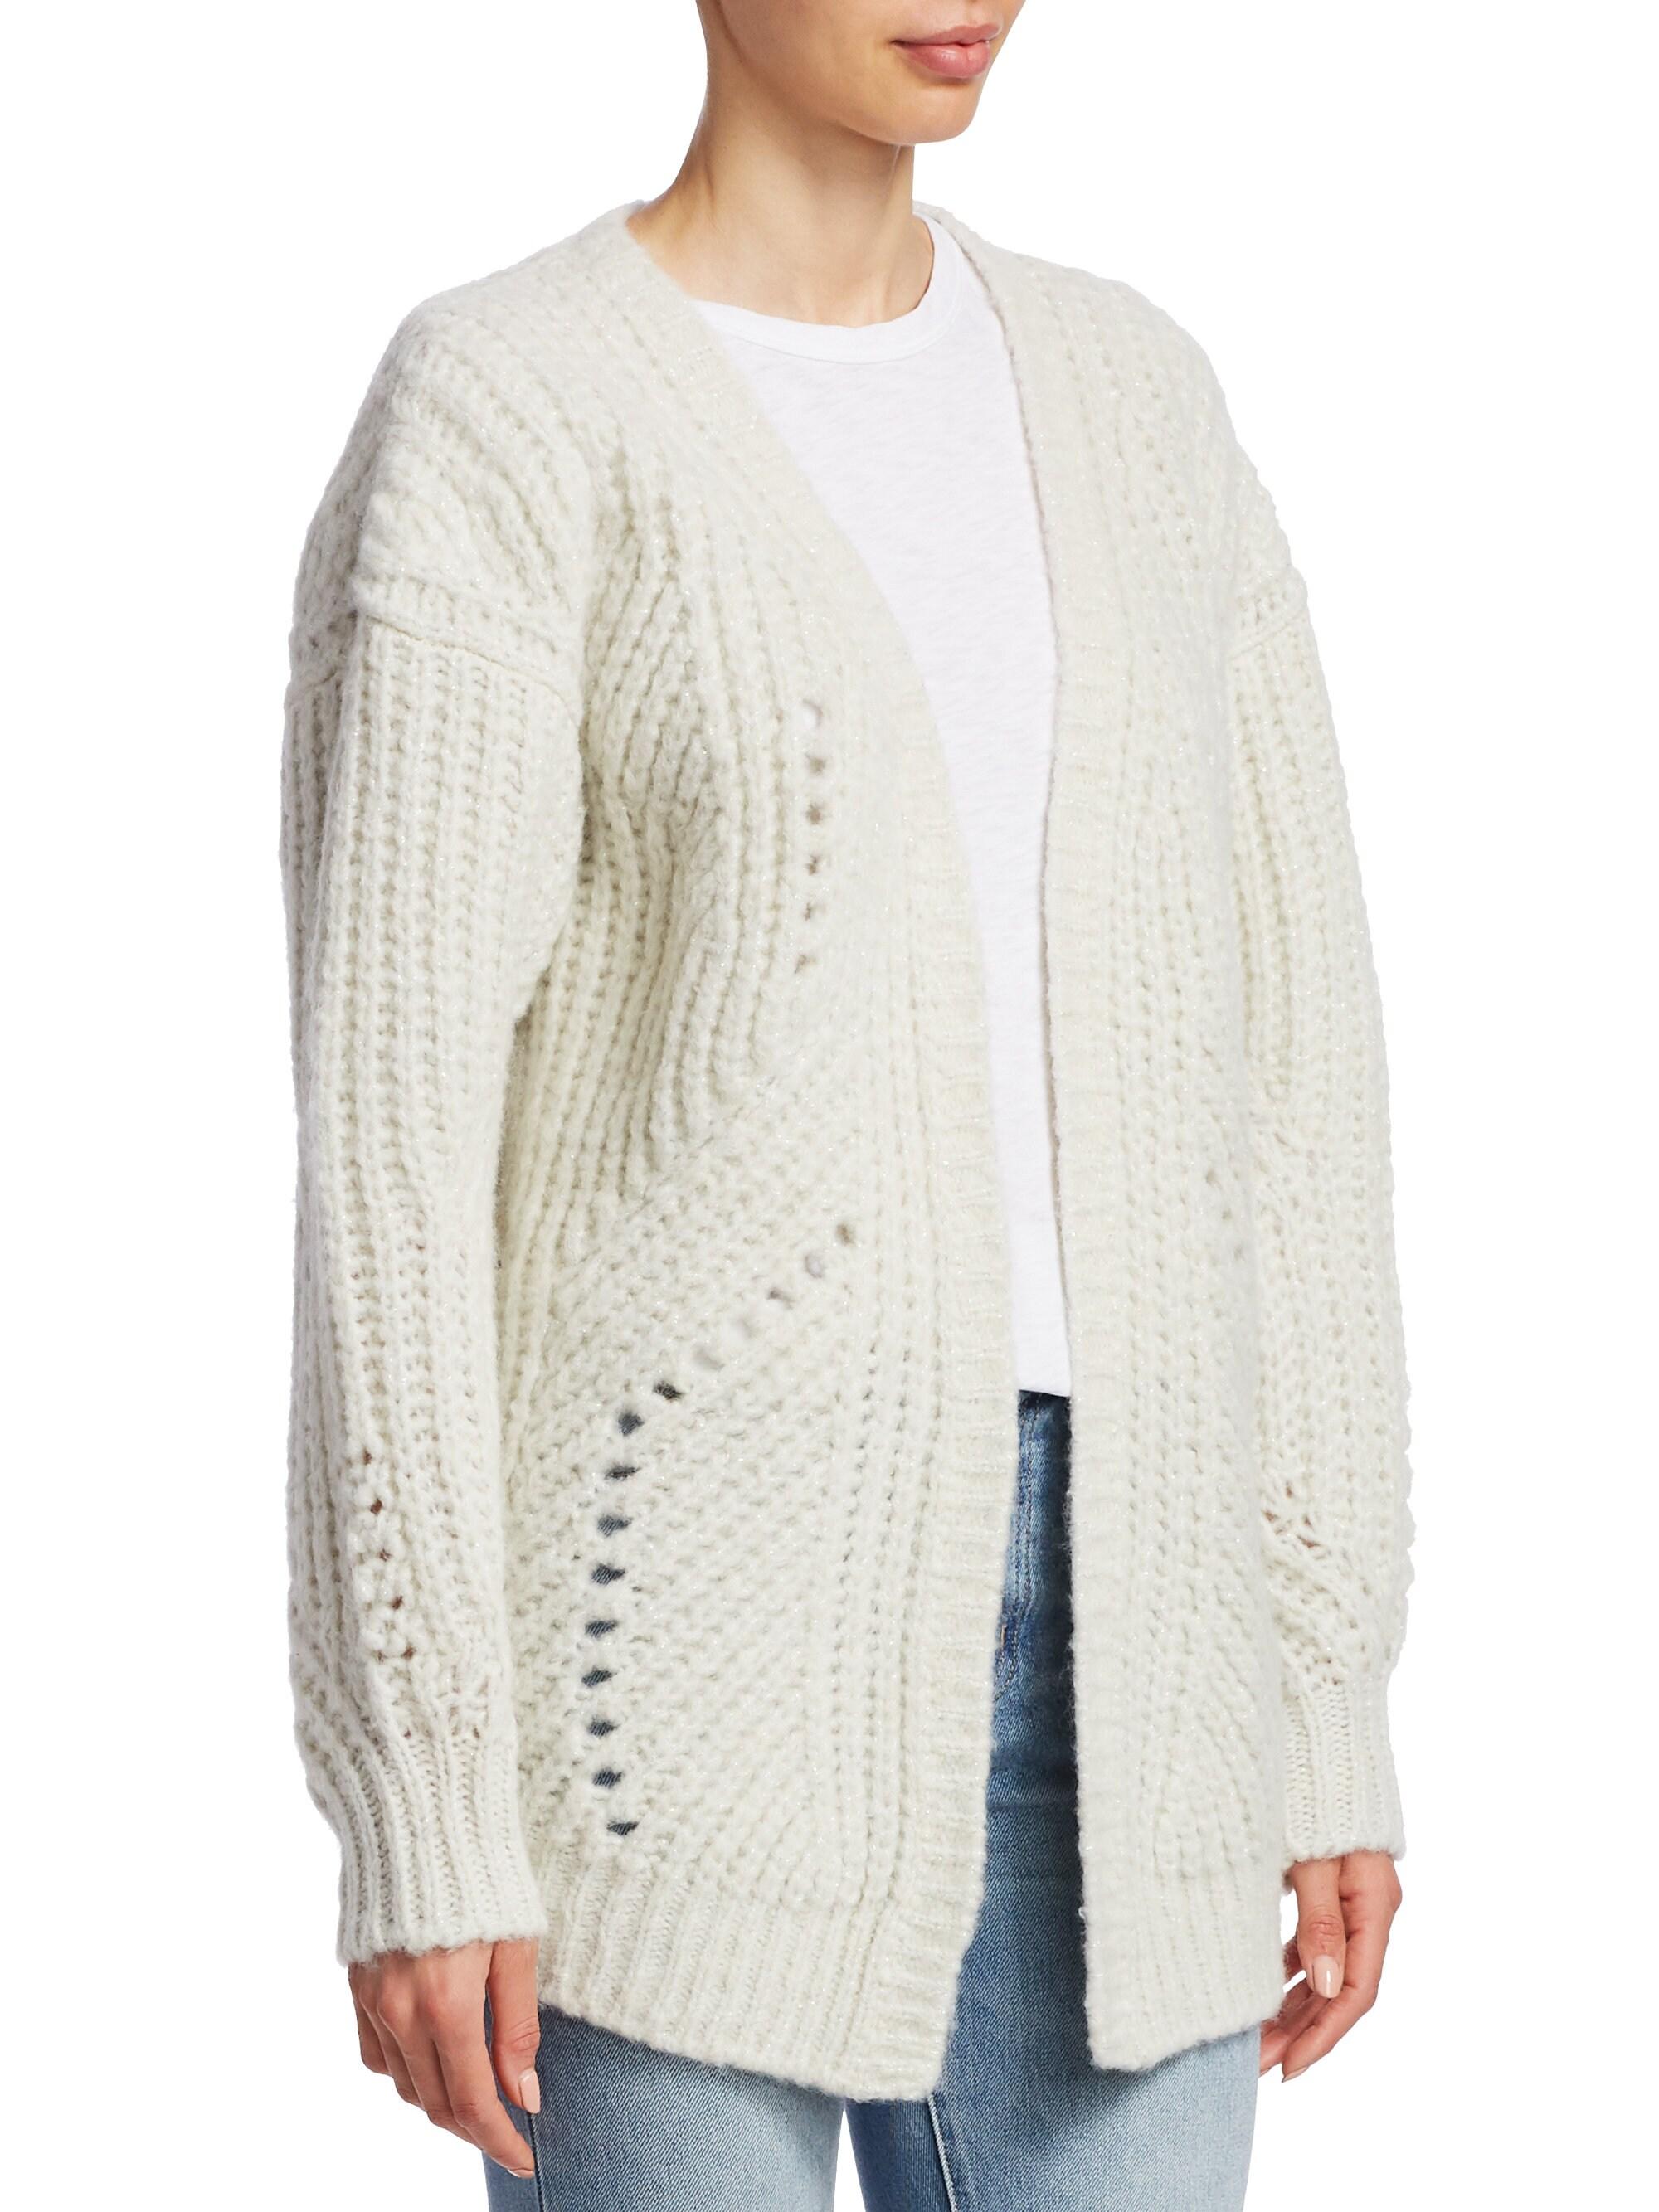 IRO Wool Vesna Chunky Knit Cardigan Sweater in White - Lyst